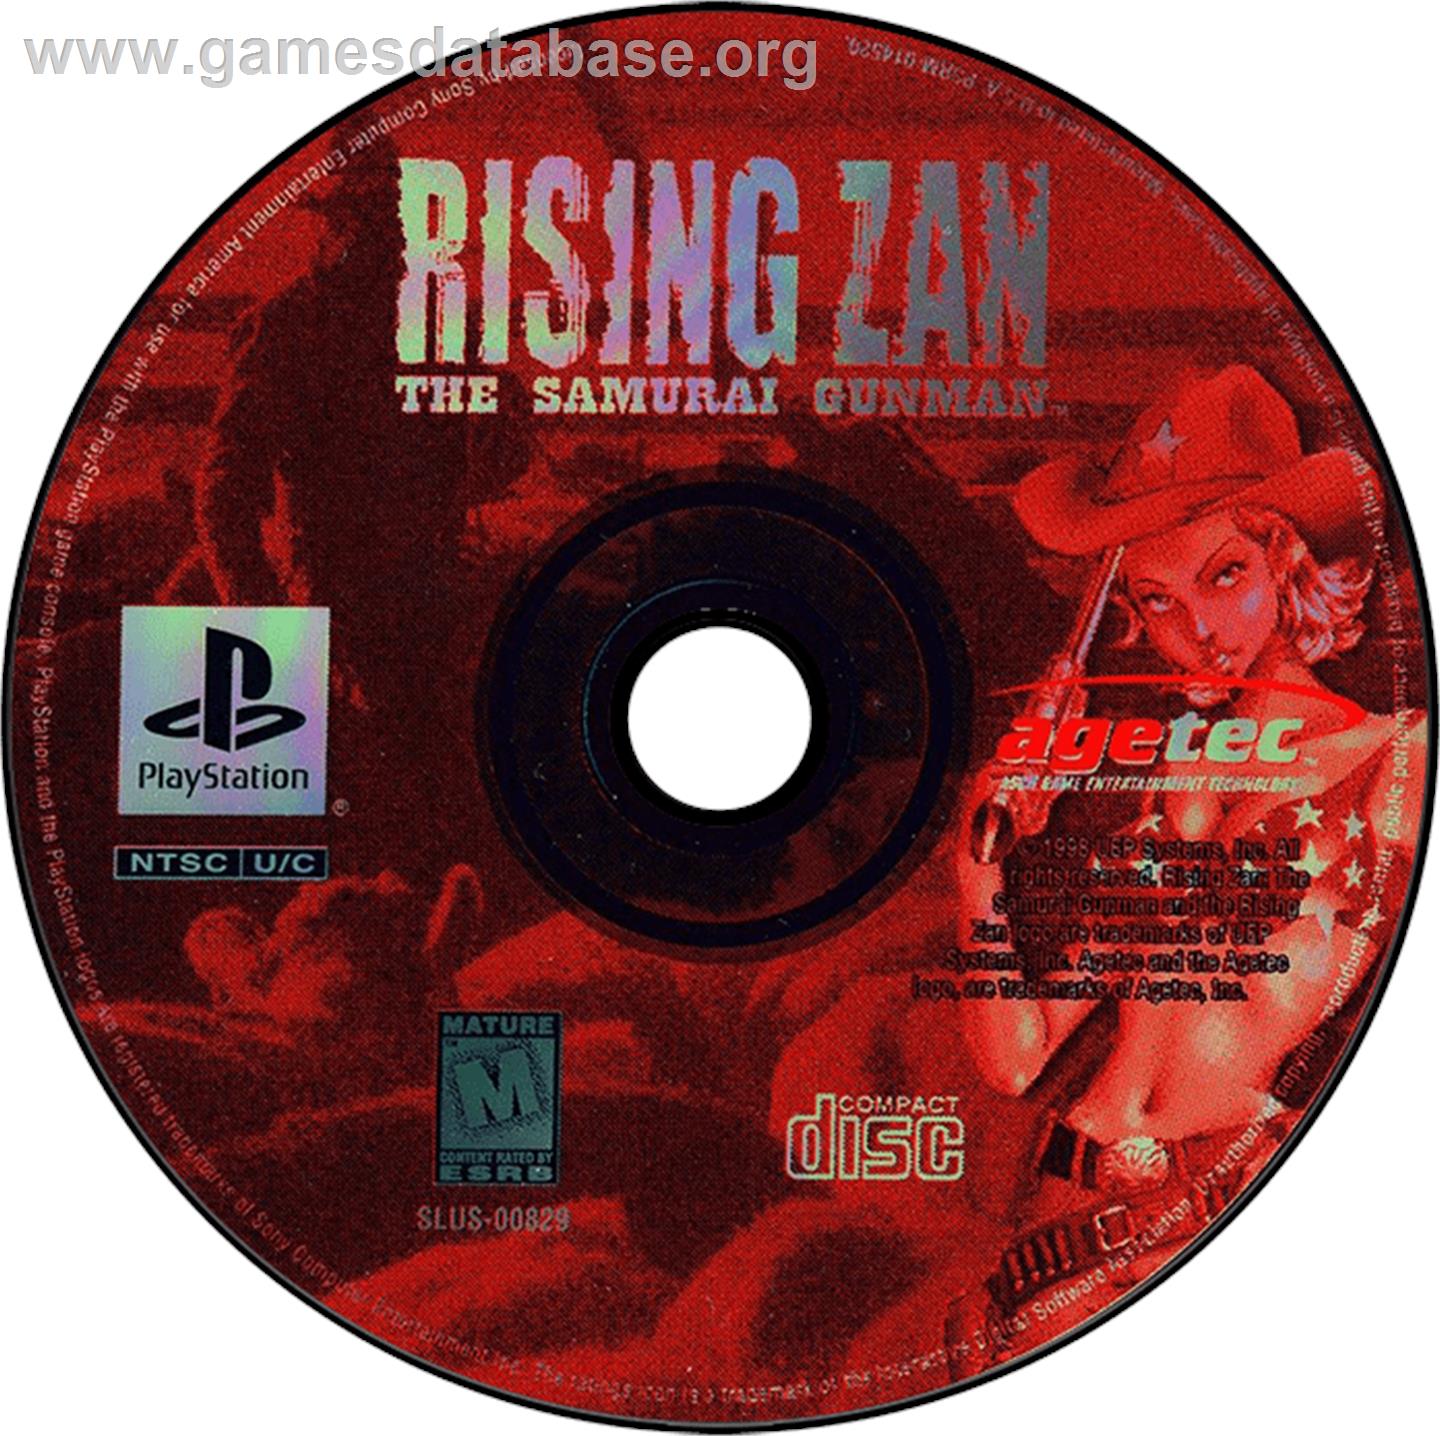 Rising Zan: The Samurai Gunman - Sony Playstation - Artwork - Disc